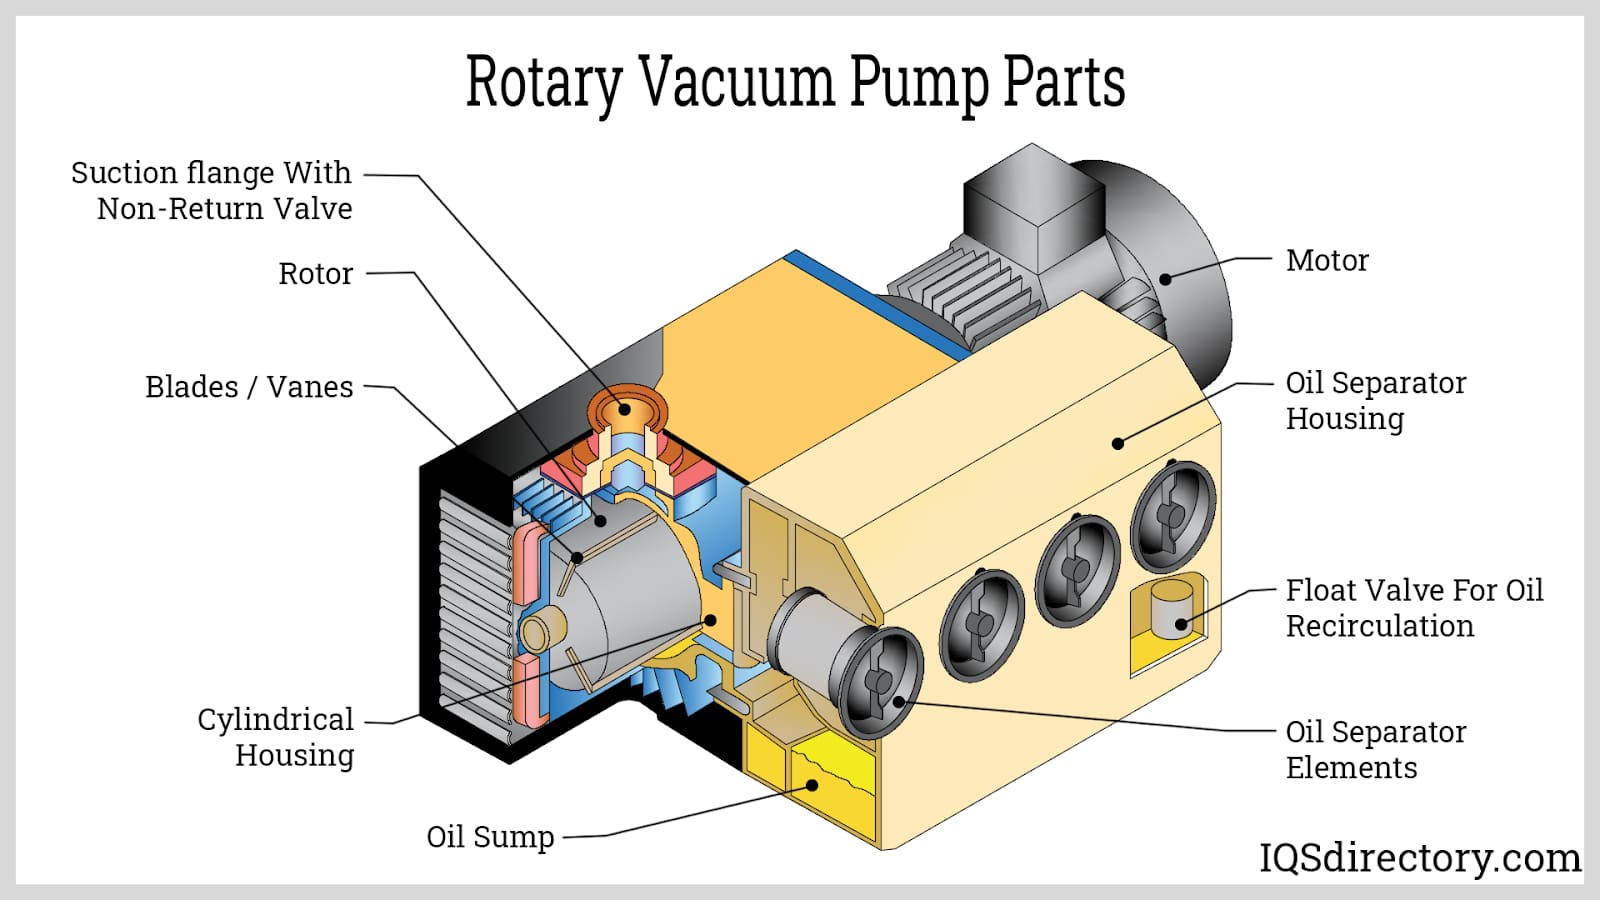 Rotary Vacuum Pump Parts